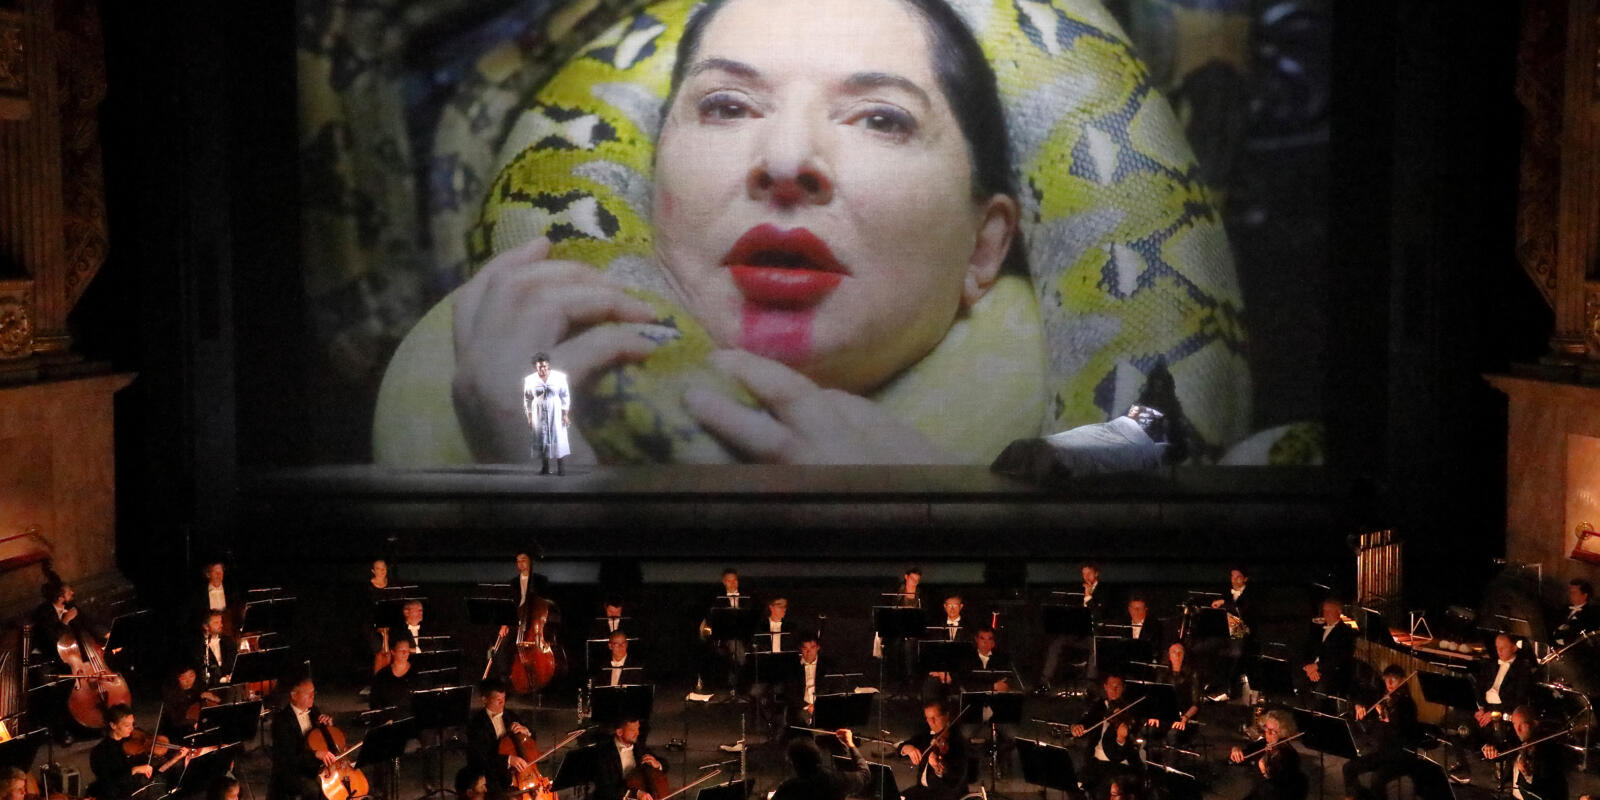 Production Image from 7 Deaths of Maria Callas by Marina Abramović. Bayerische Staatsoper © W. Hösl (Photos)